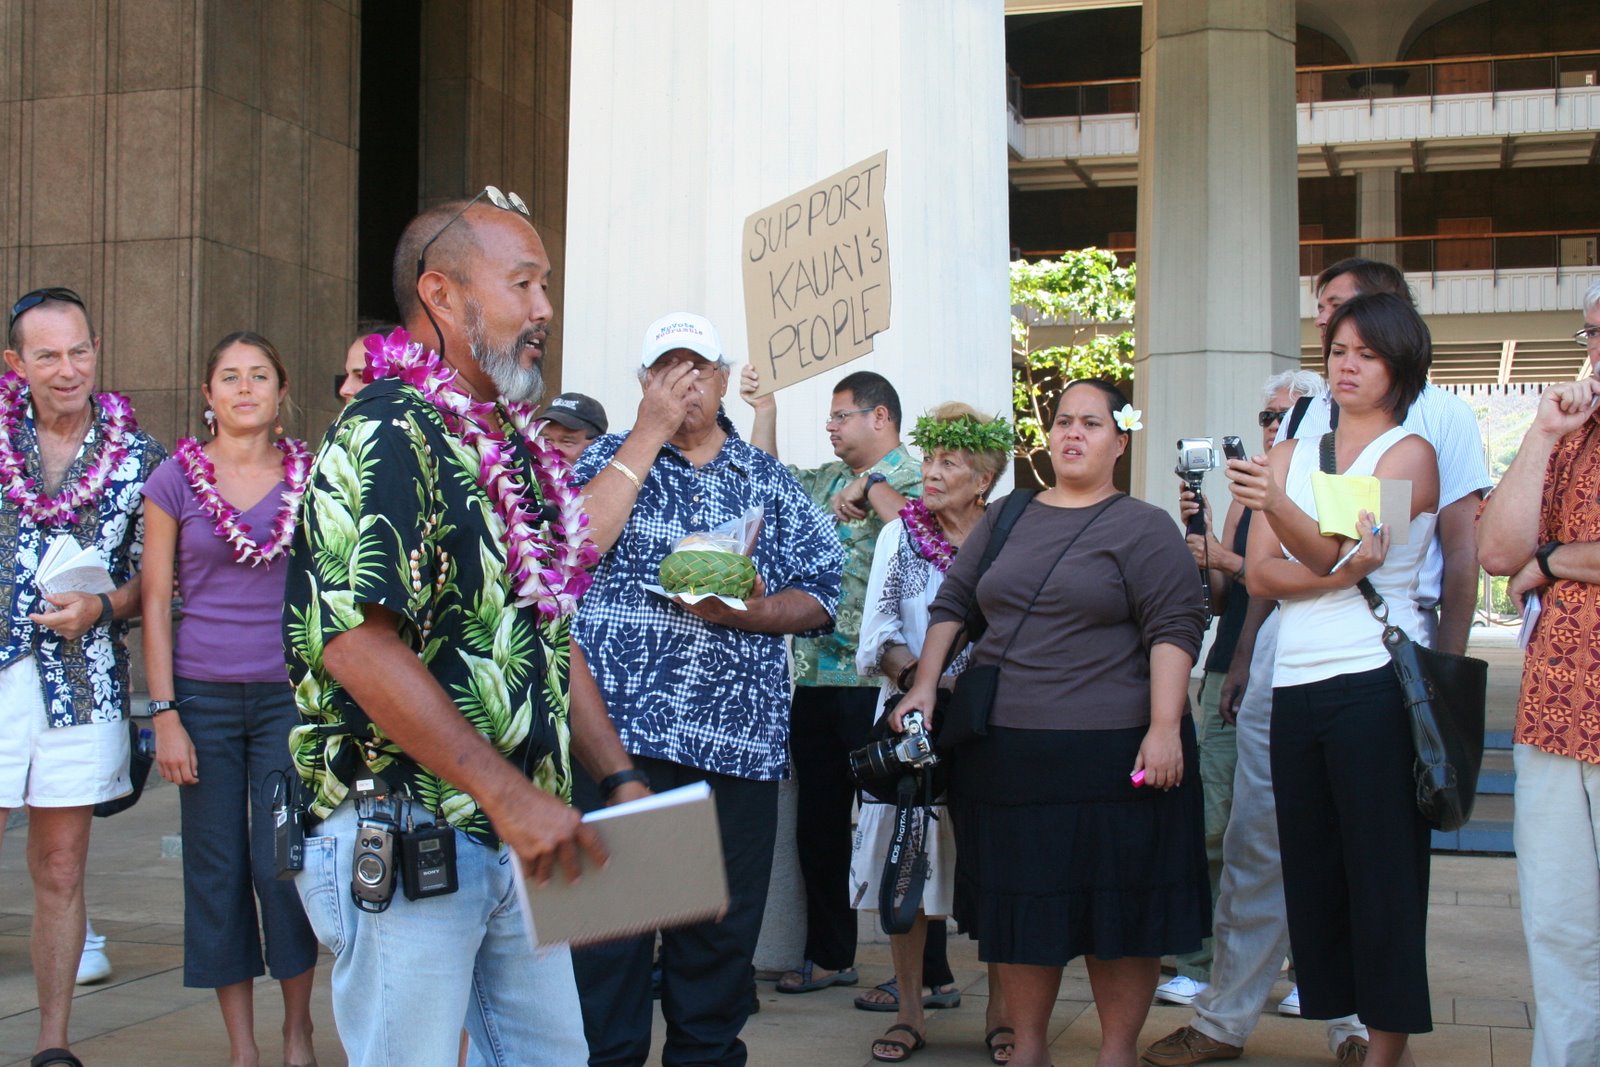 [Kauai+Protesters+Superferry+Dennis.jpg]